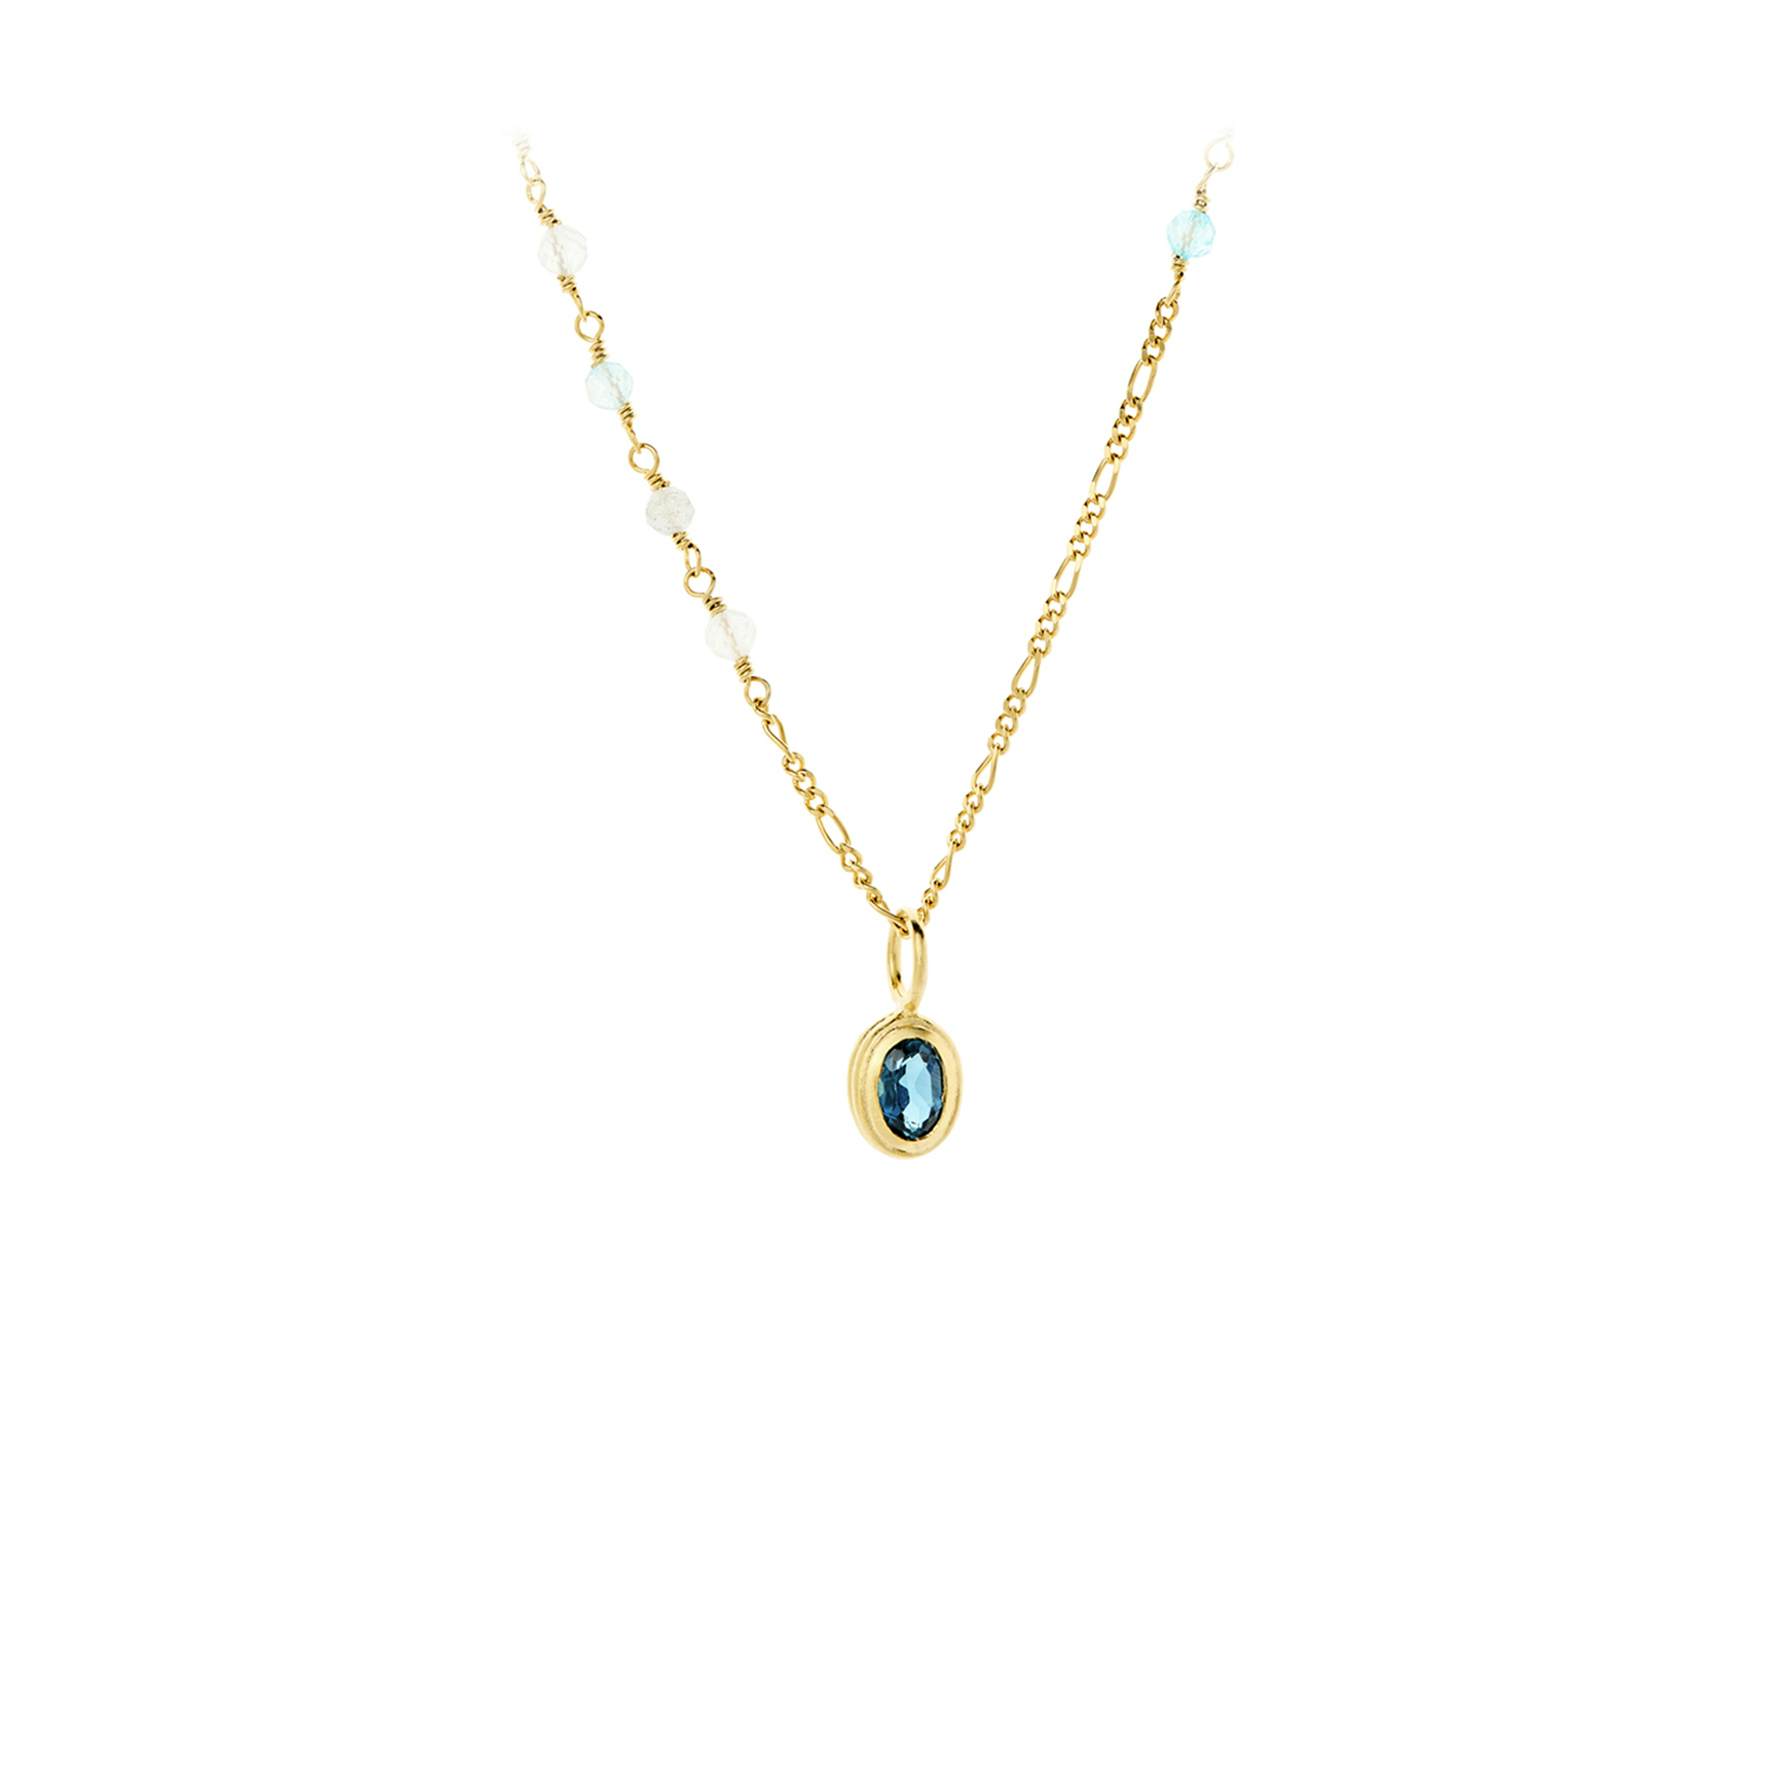 Hellir Blue Ice Necklace fra Pernille Corydon i Forgyldt-Sølv Sterling 925